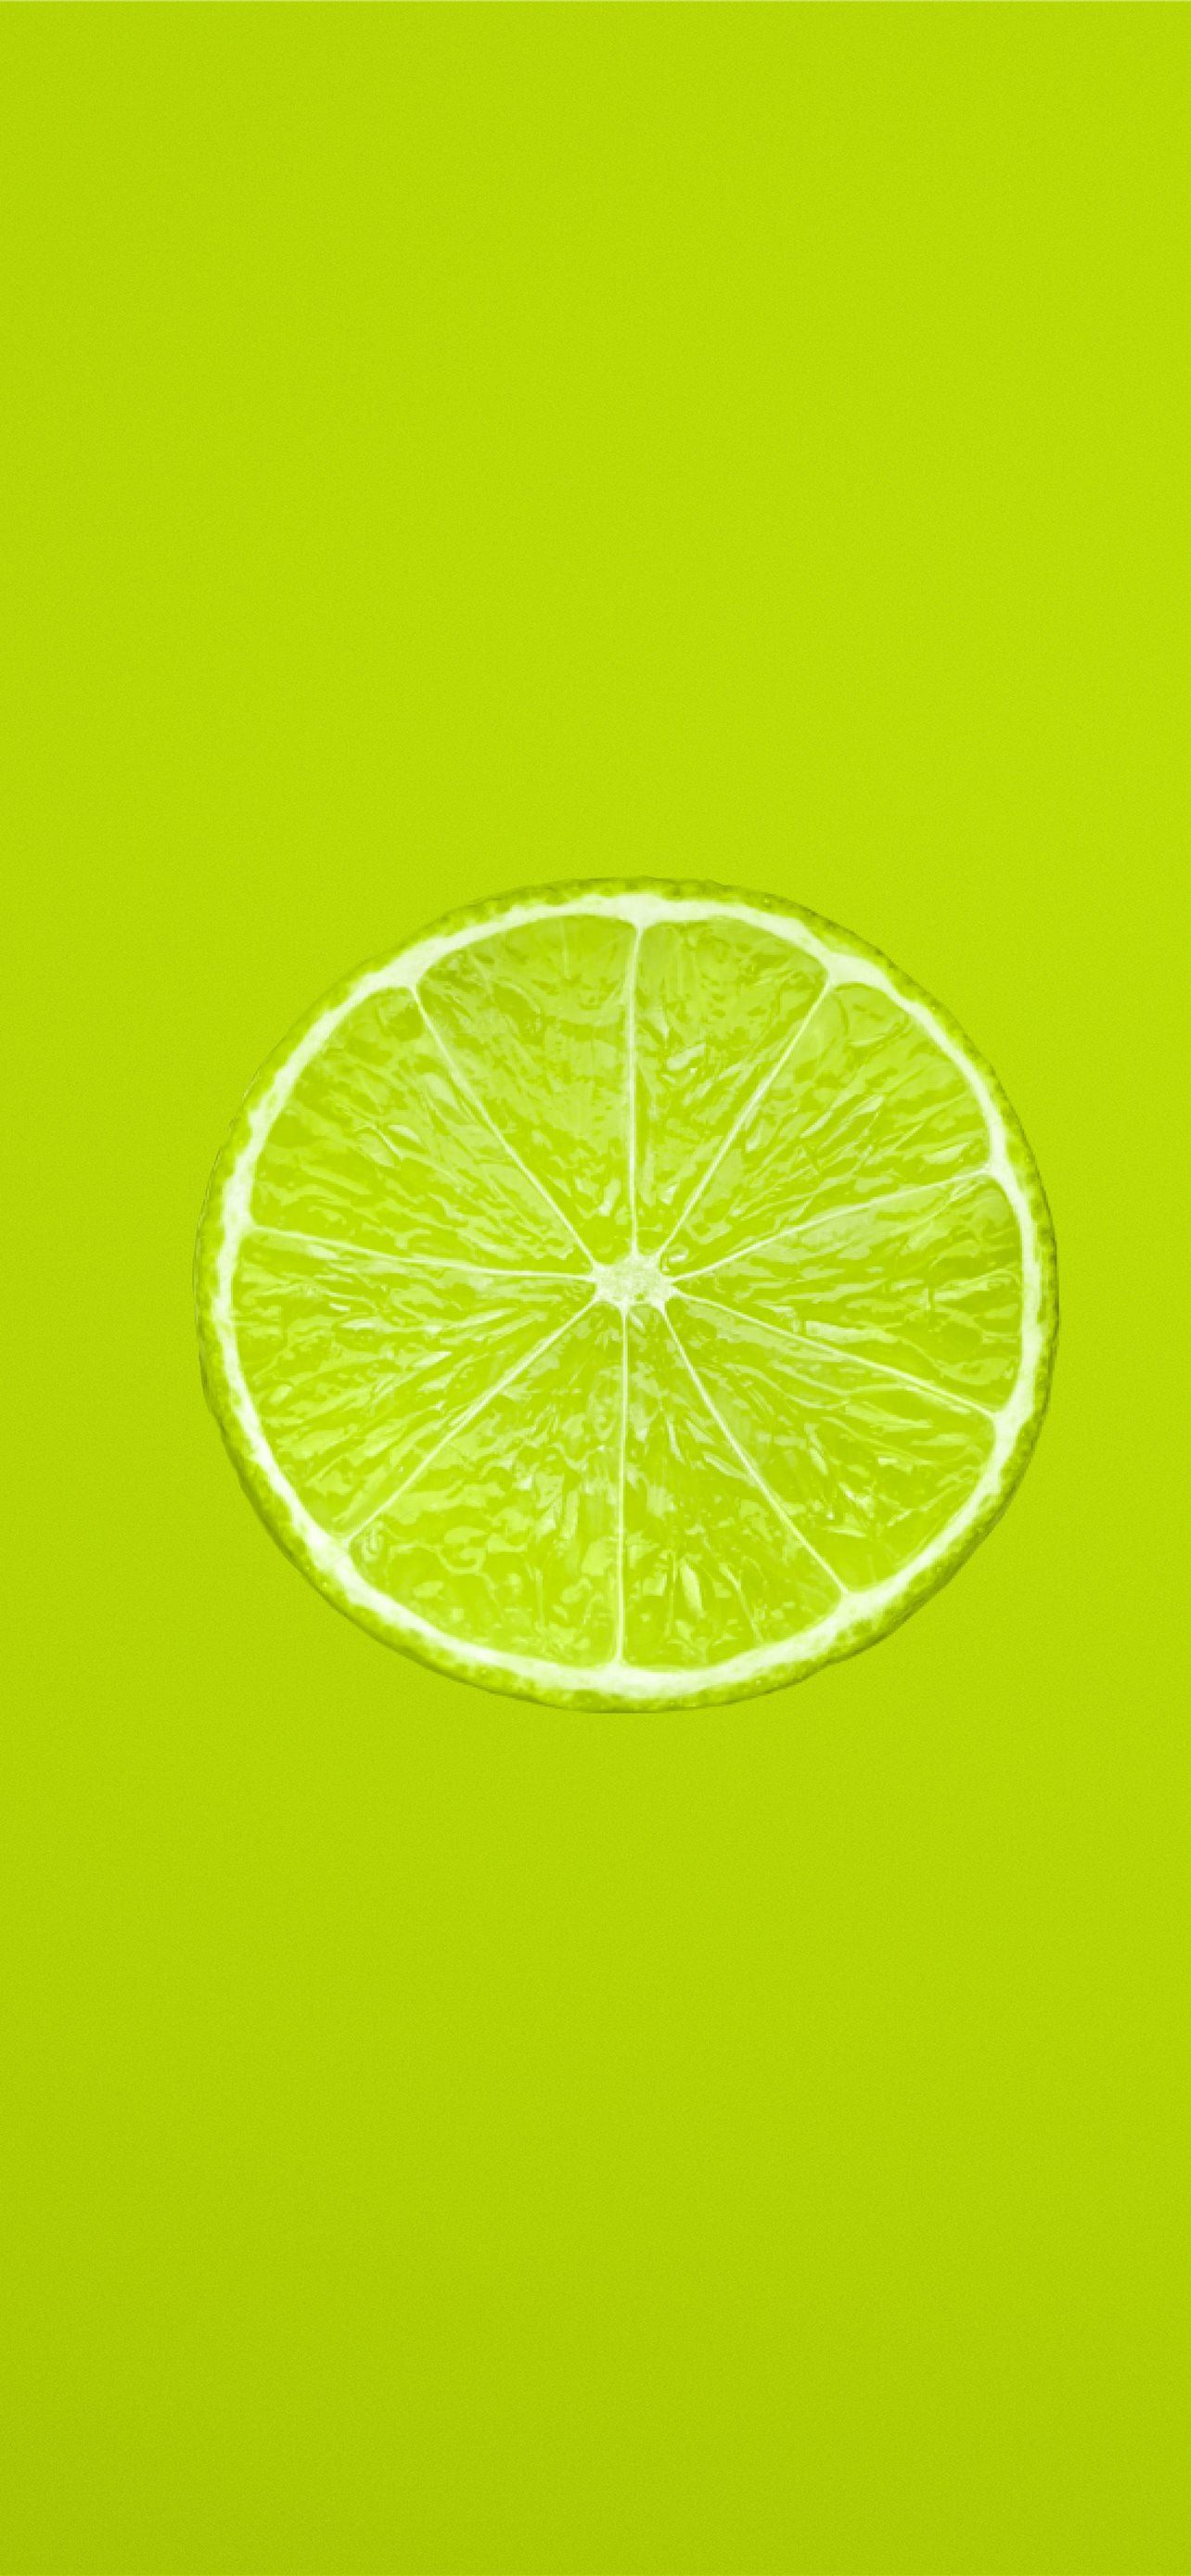 yellow lemon fruit on green background iPhone Wallpaper Free Download